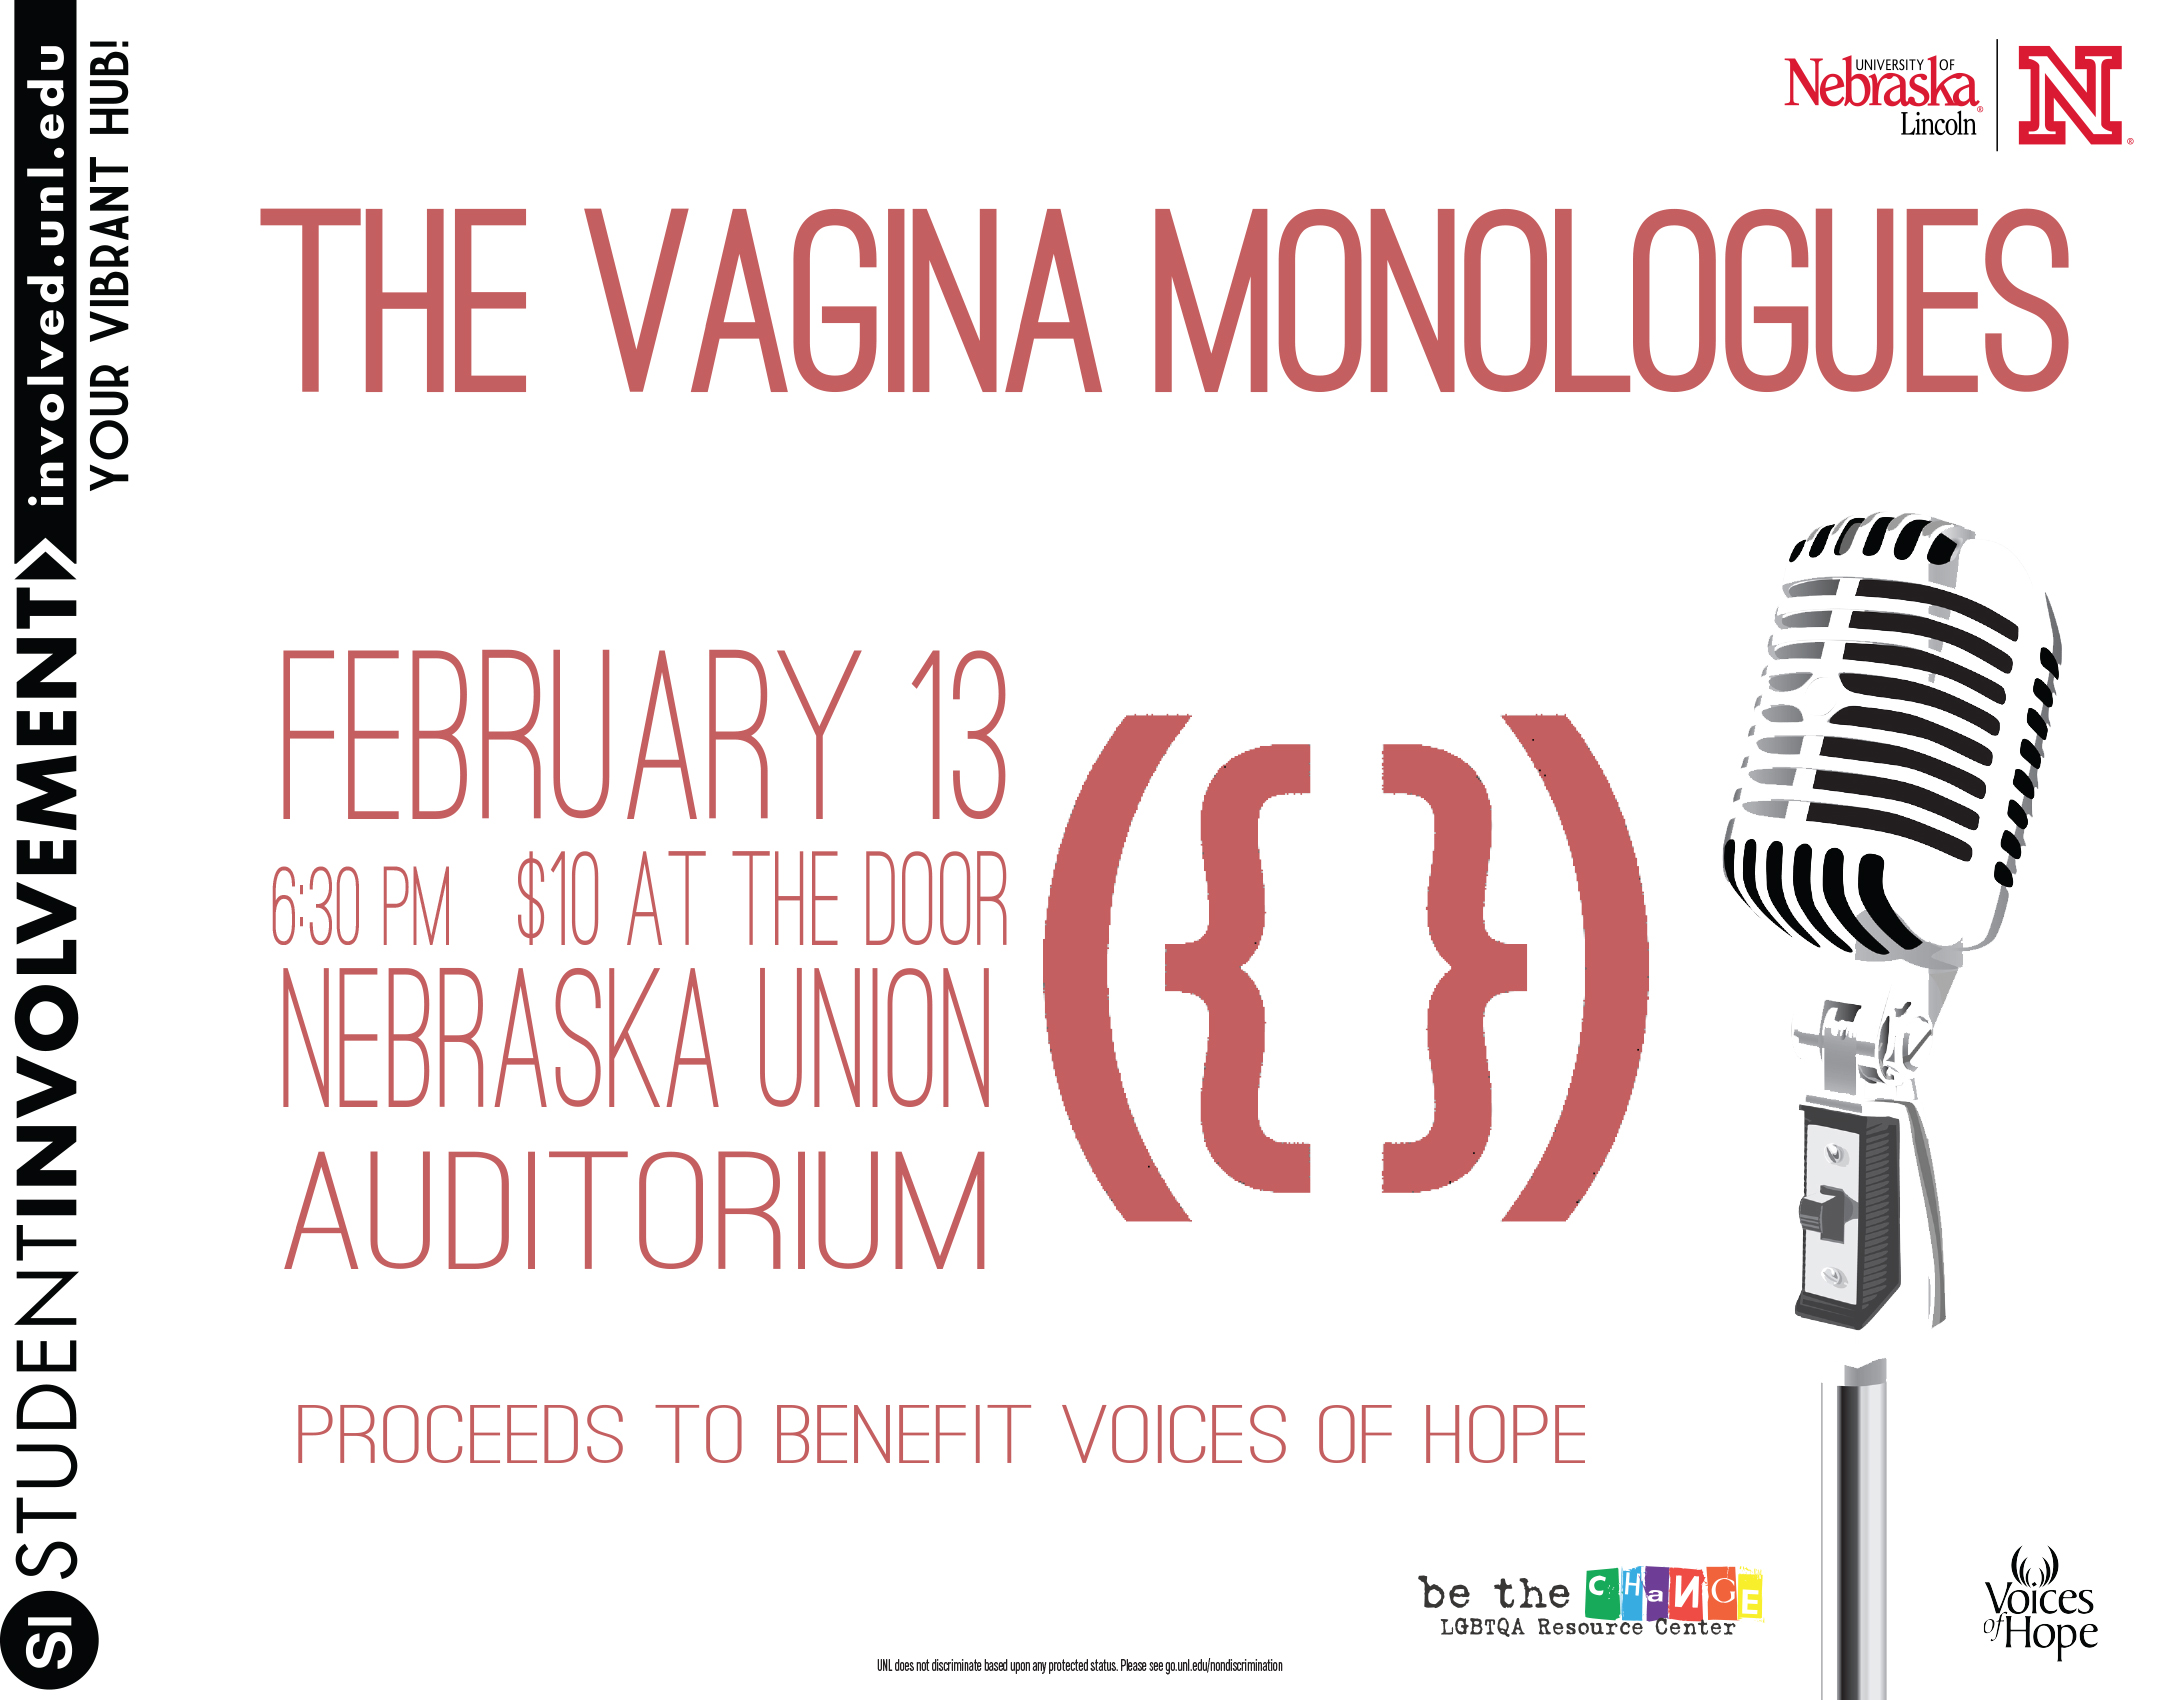 The Vagina Monologues Announce University Of Nebraska Lincoln